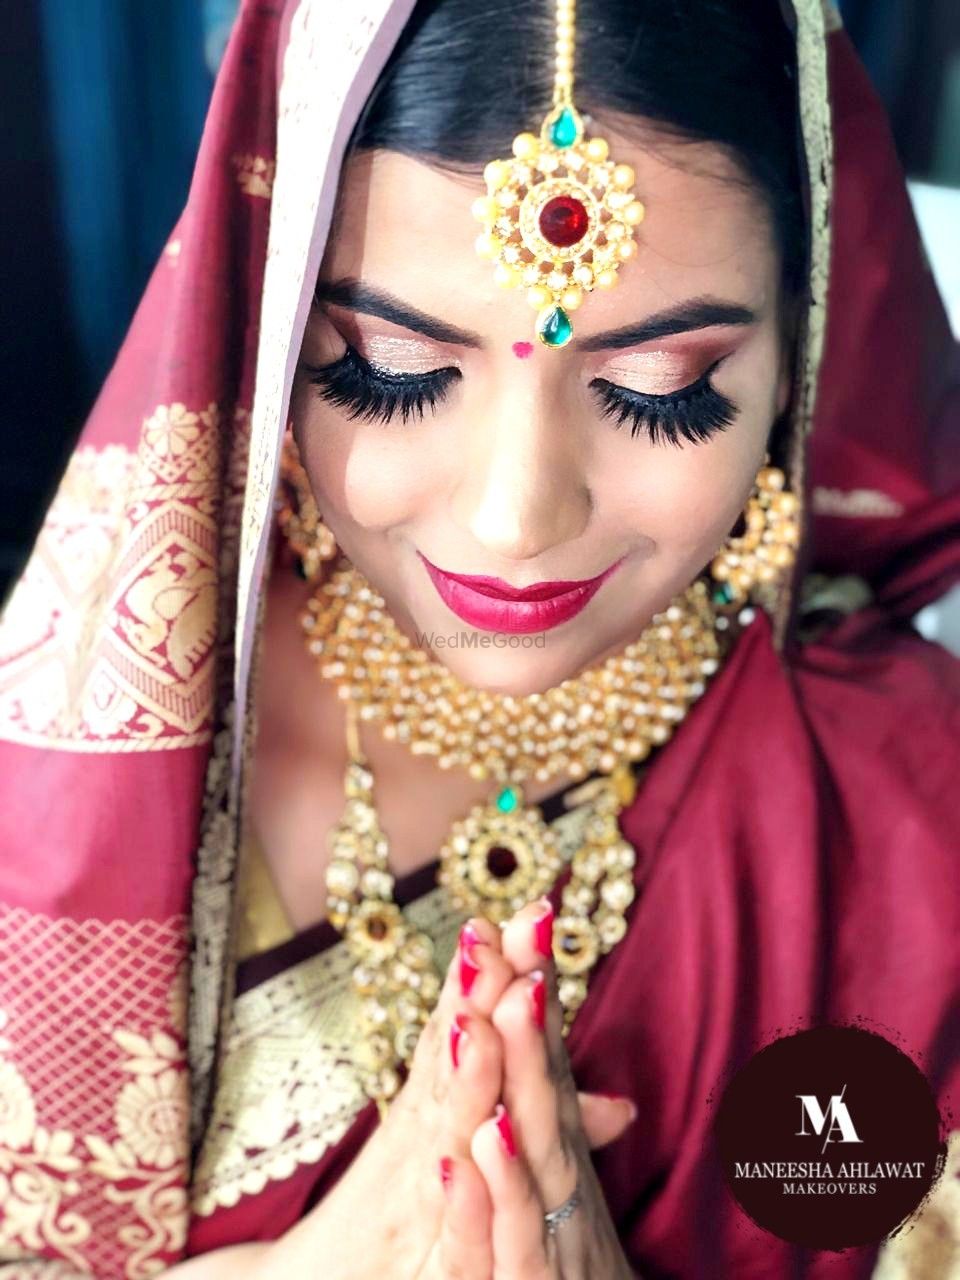 Photo From Jaipur Bride - By Maneesha Ahlawat Makeovers